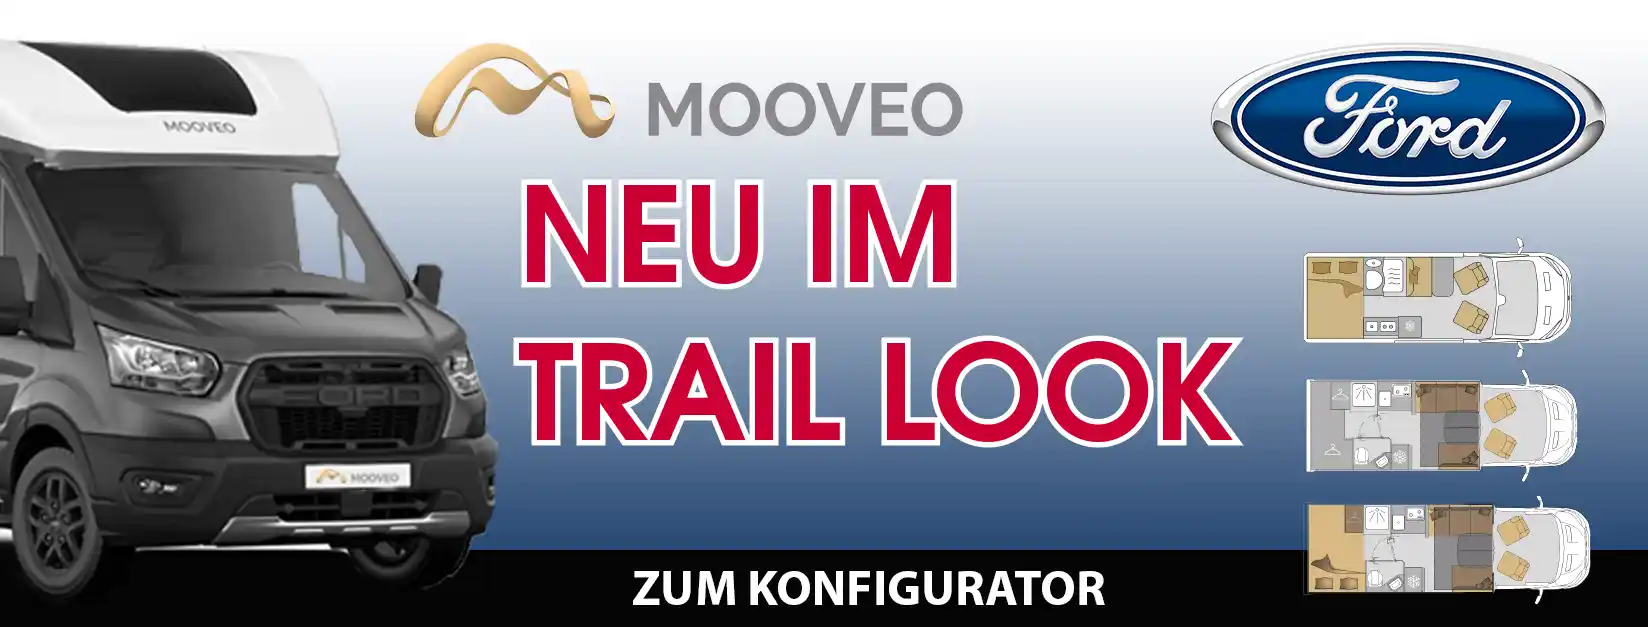 Wohnmobile-Konfigurator_Mooveo-FORD_01